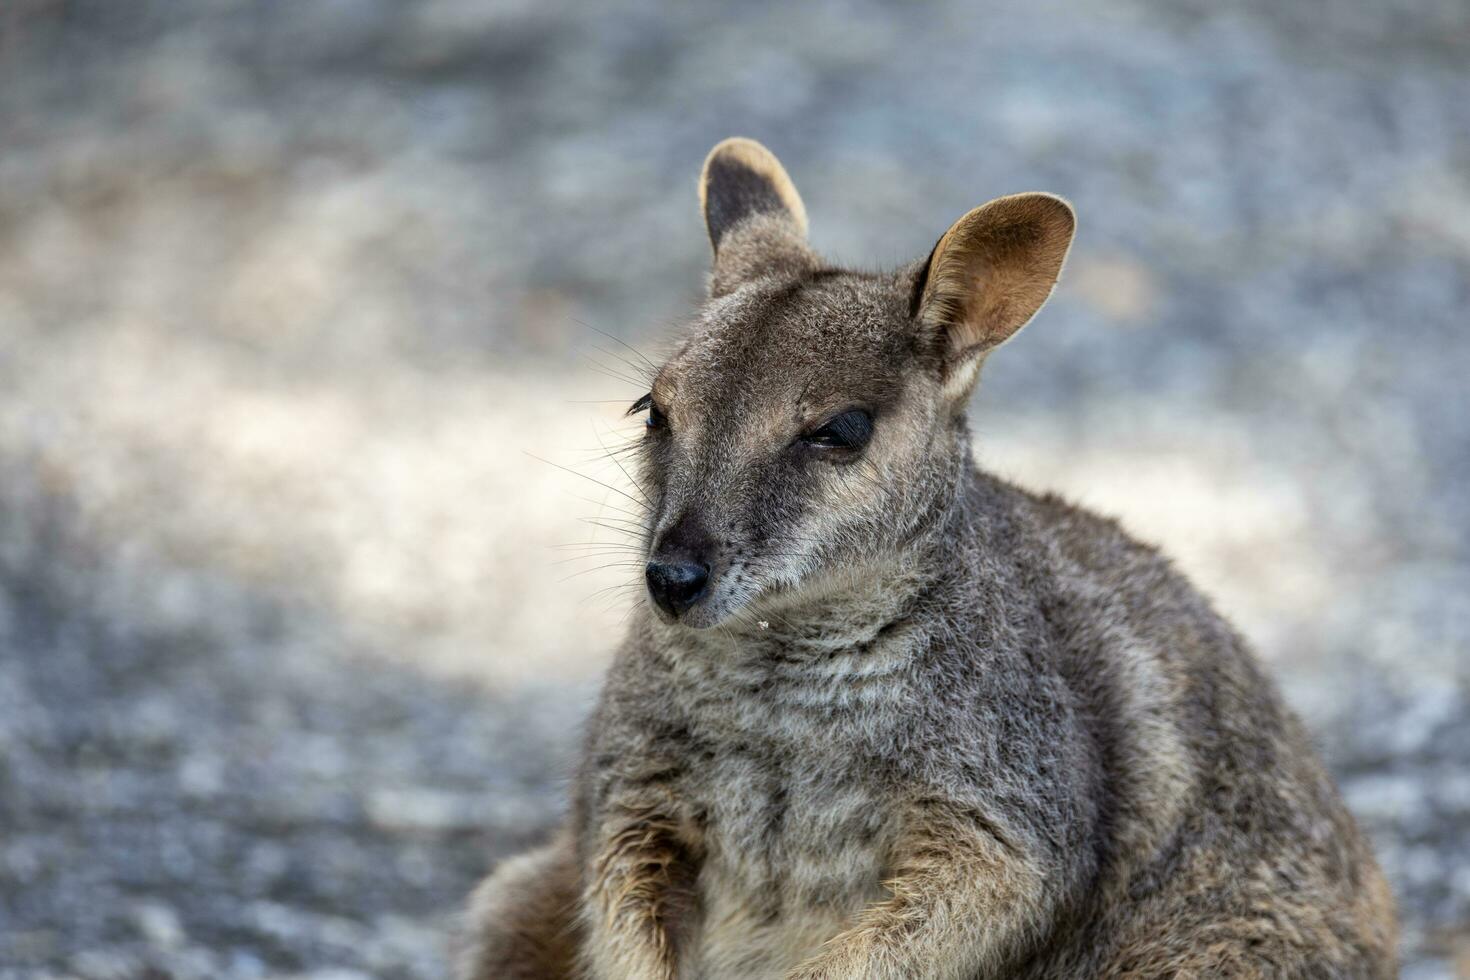 Rock Wallaby in Australia photo